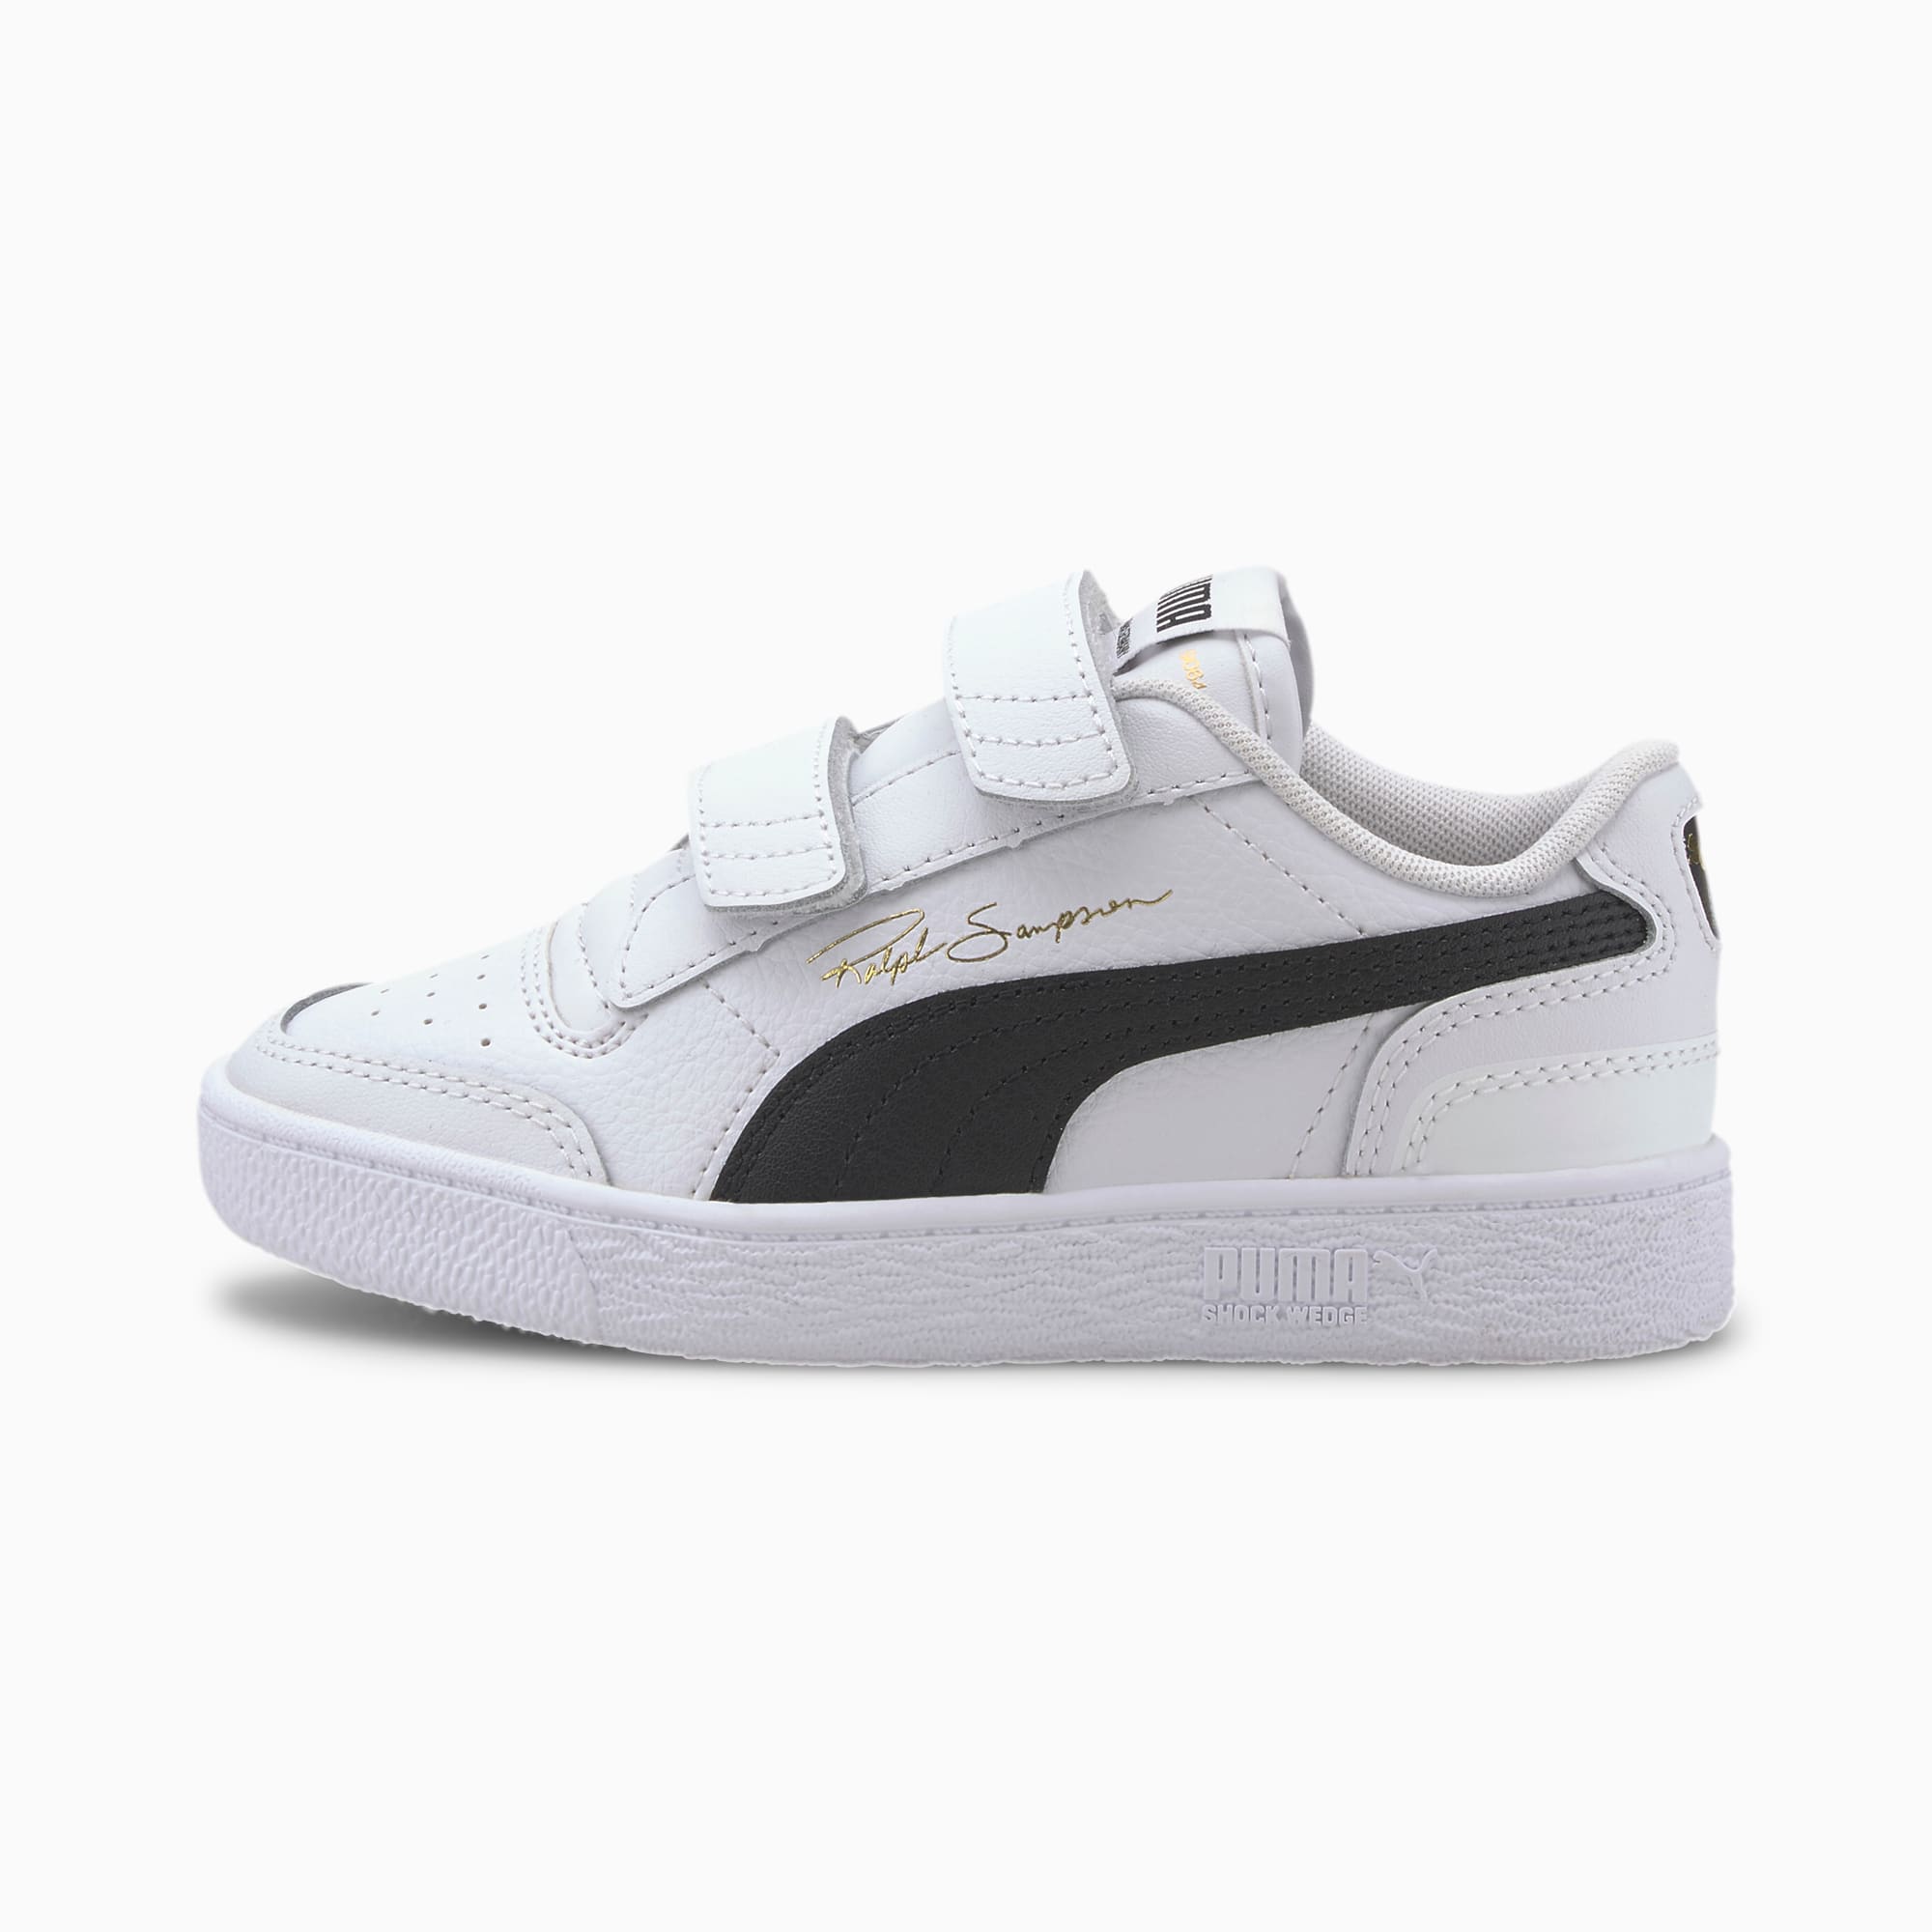 PUMA Chaussure Ralph Sampson Lo V kindersneakers pour Enfant, Blanc/Noir, Taille 34.5, Chaussures